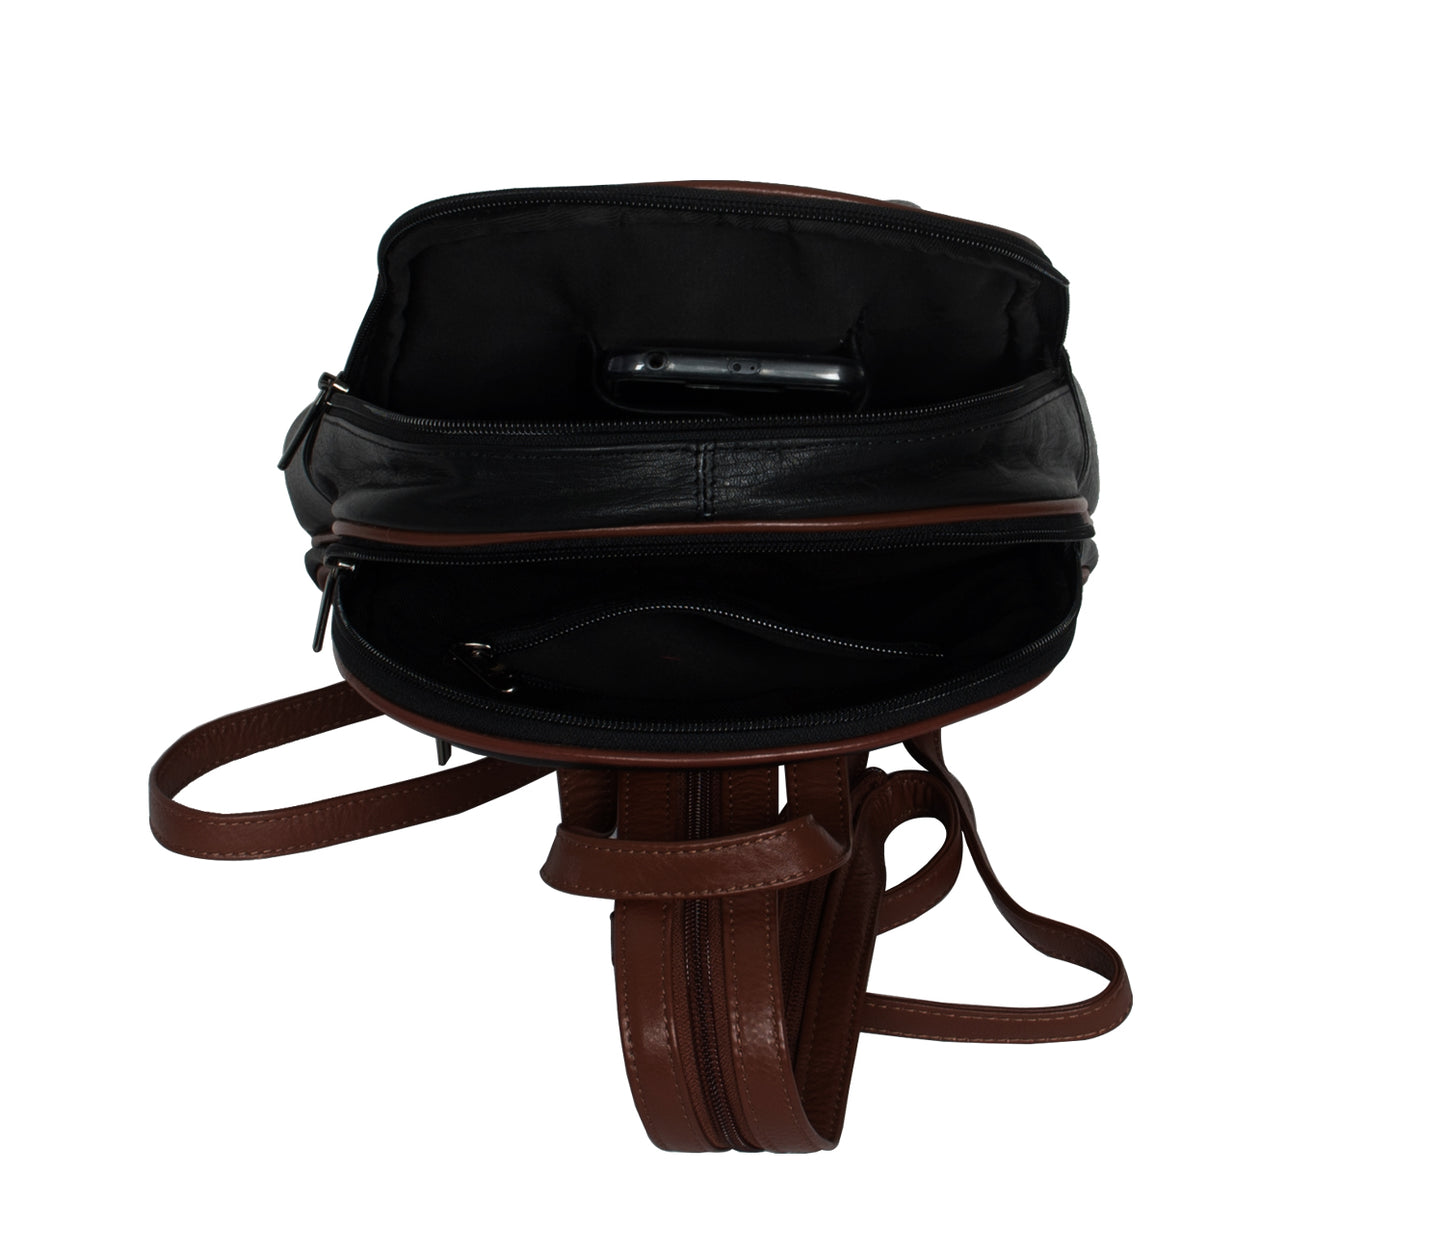 Calfnero Genuine Leather Women's Backpack (19507-Cognac-Black)